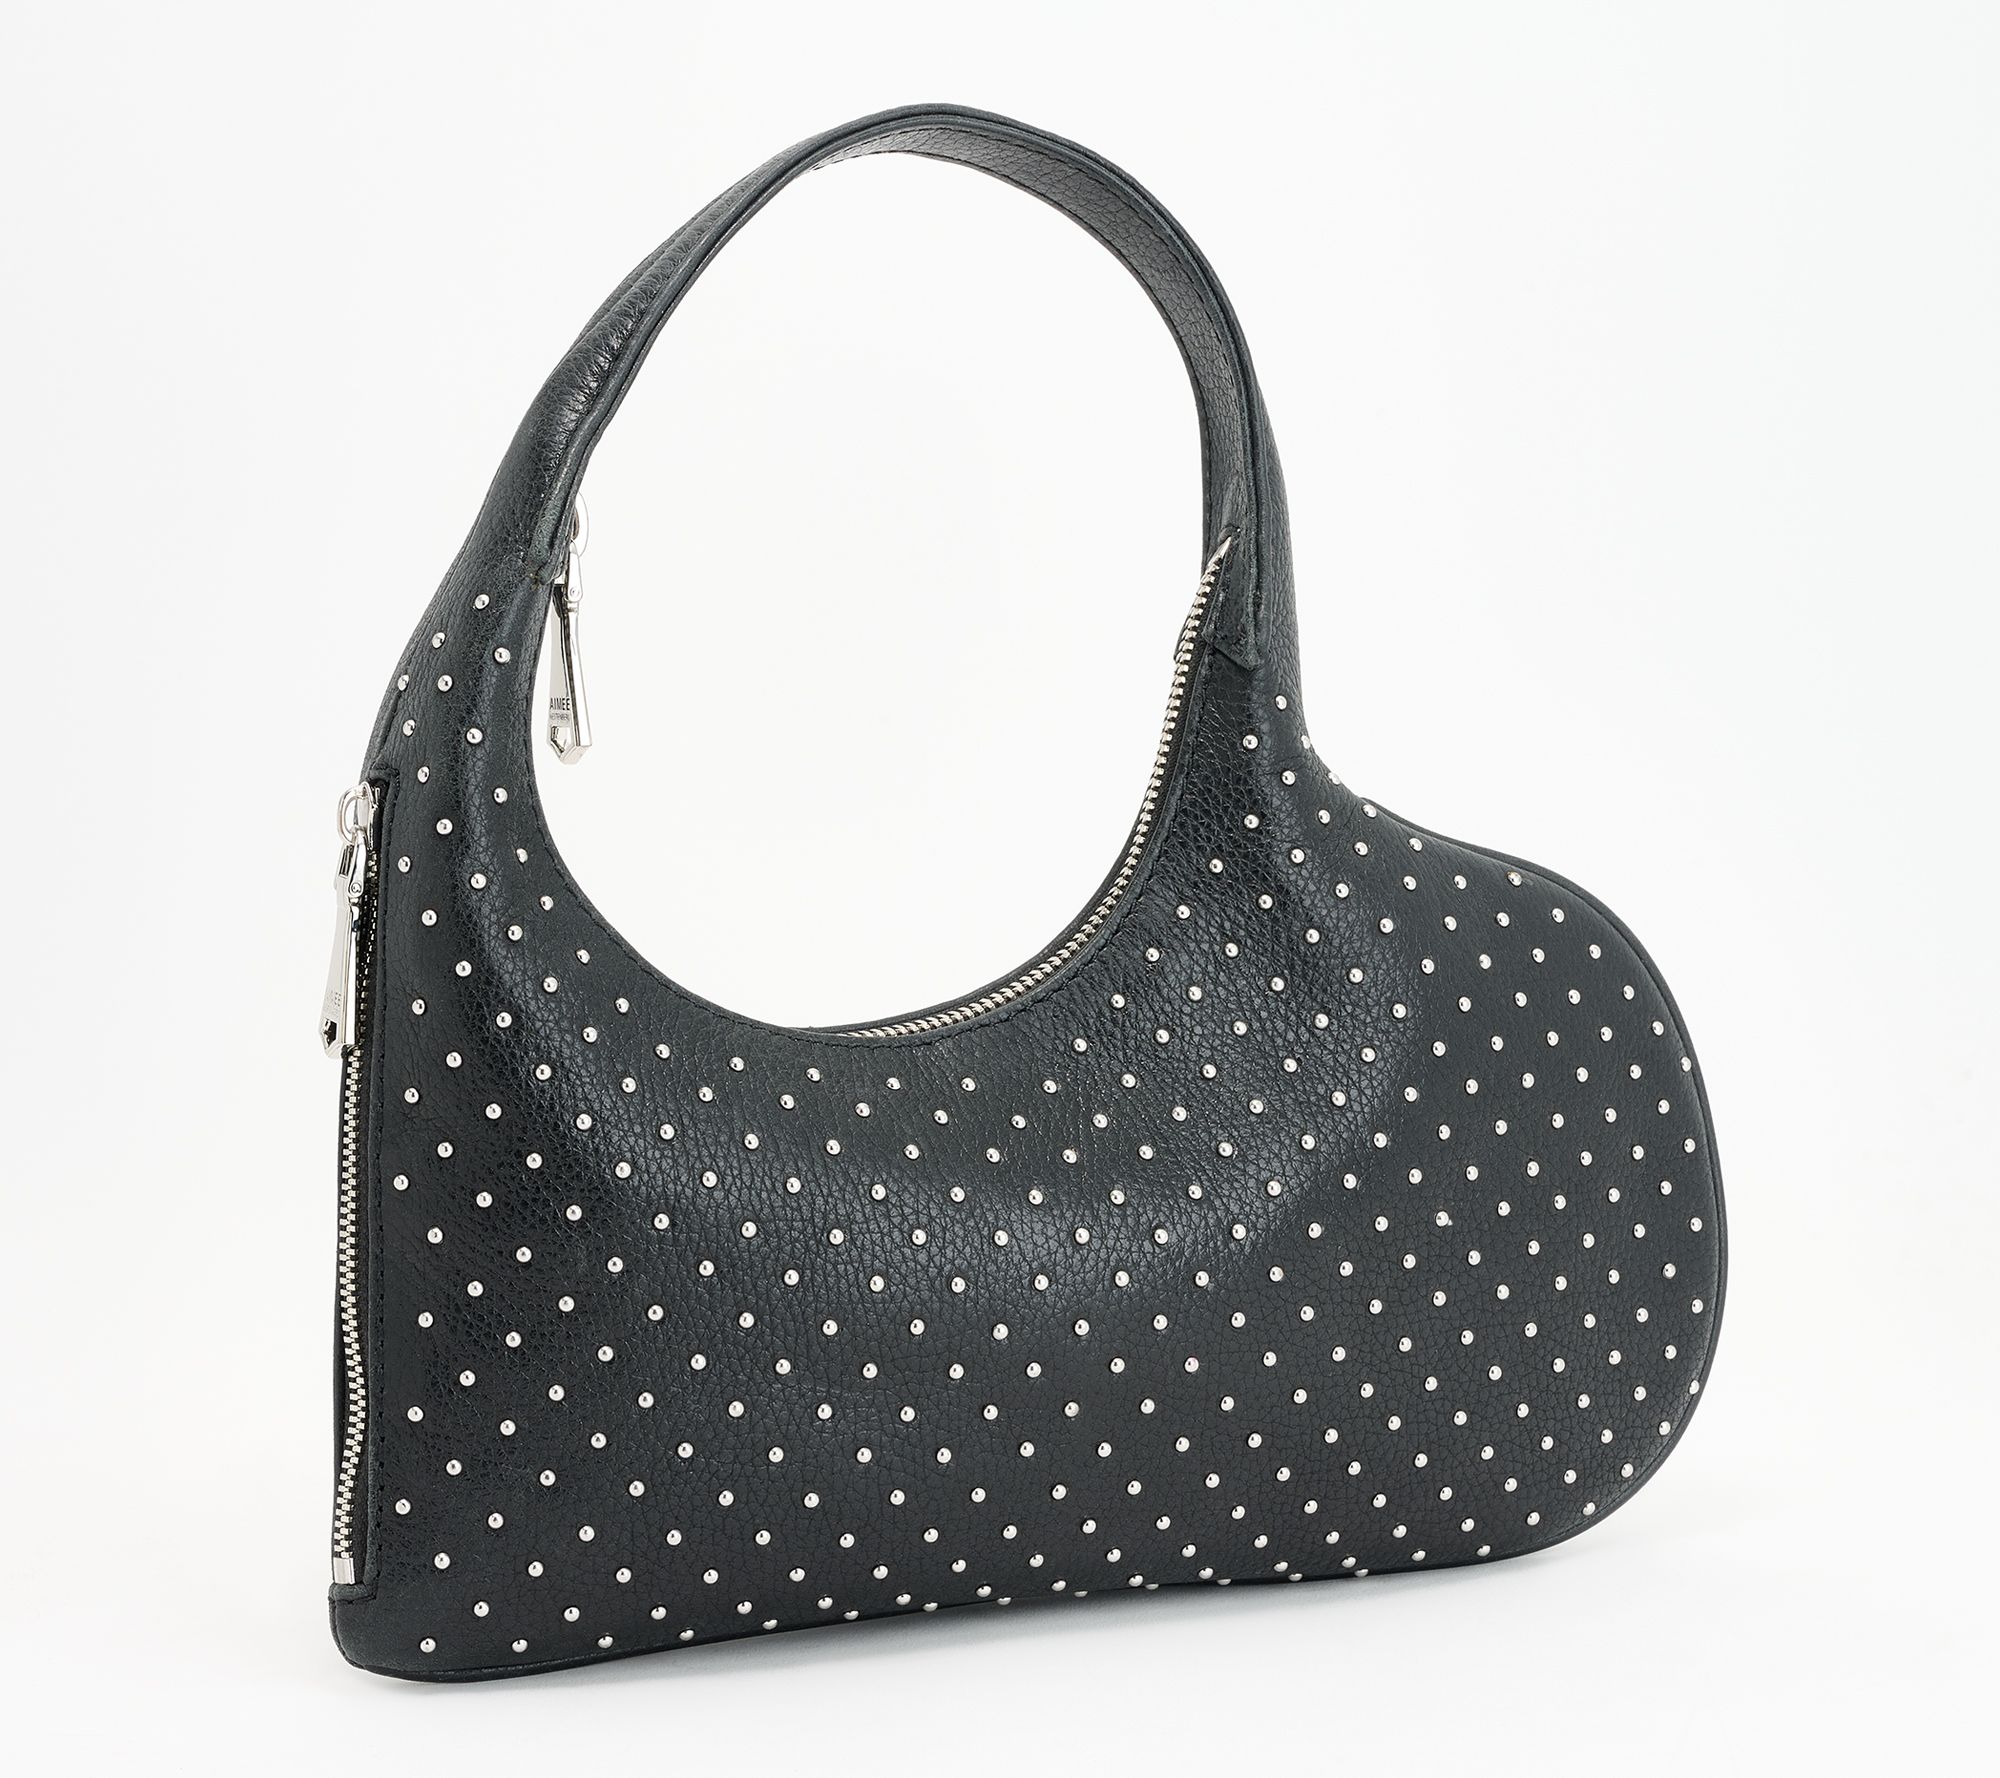 Handbags, Purses & Accessories  Designer Handbags & More 